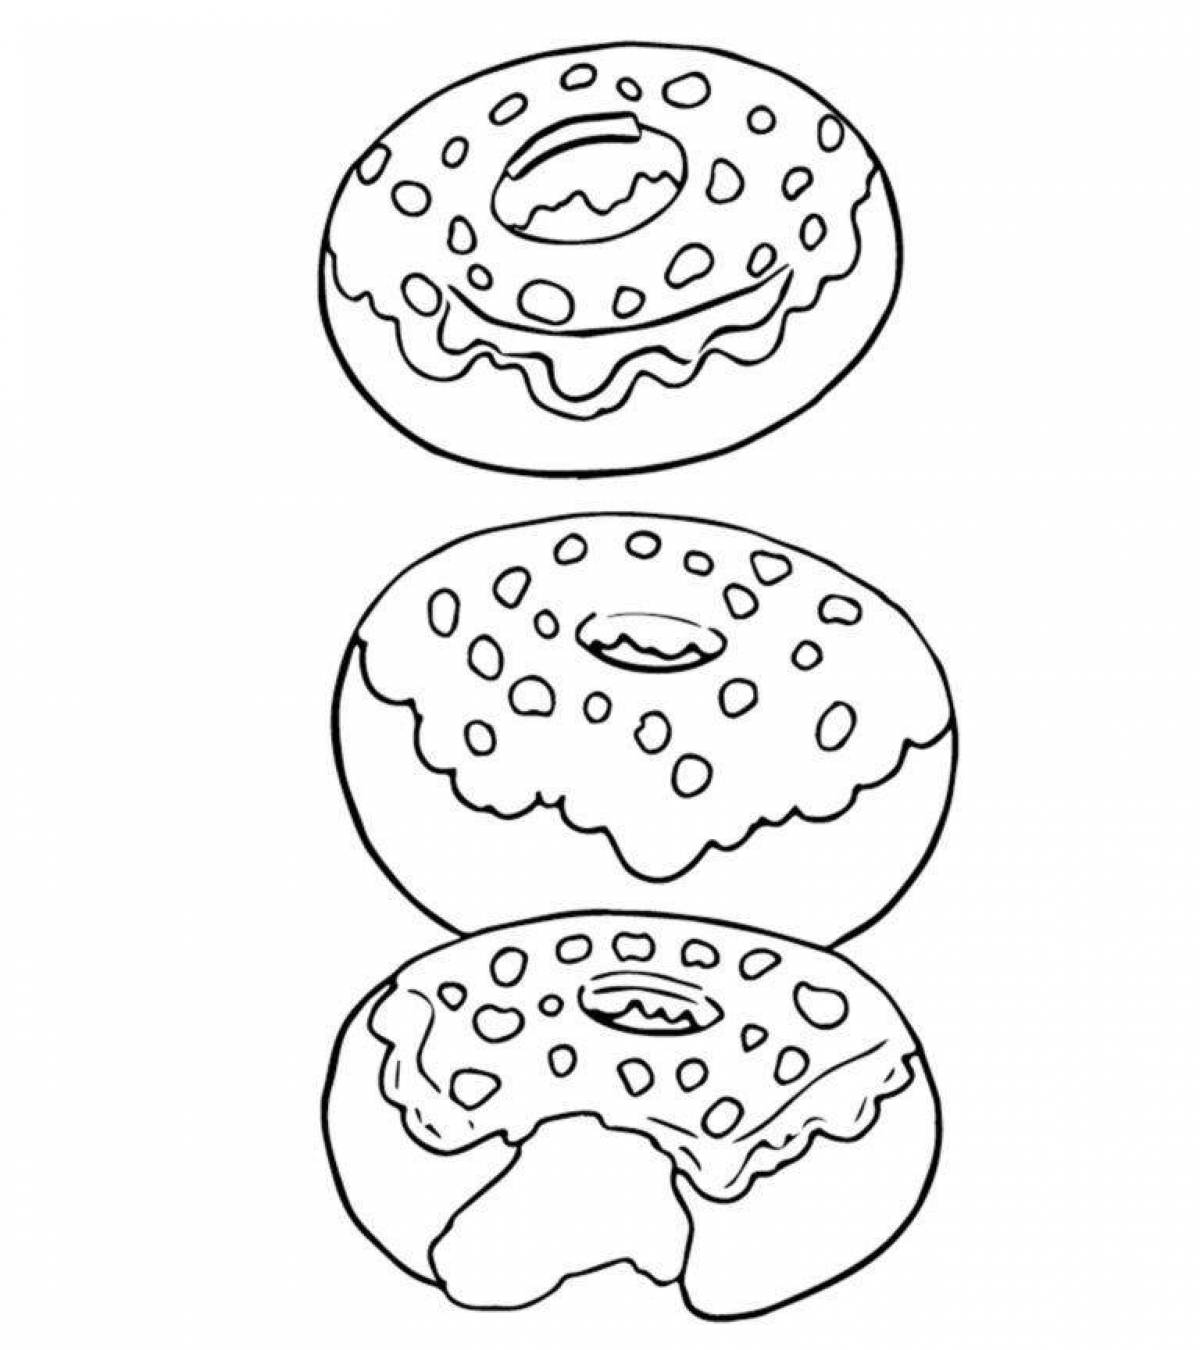 Coloring book happy donut cat